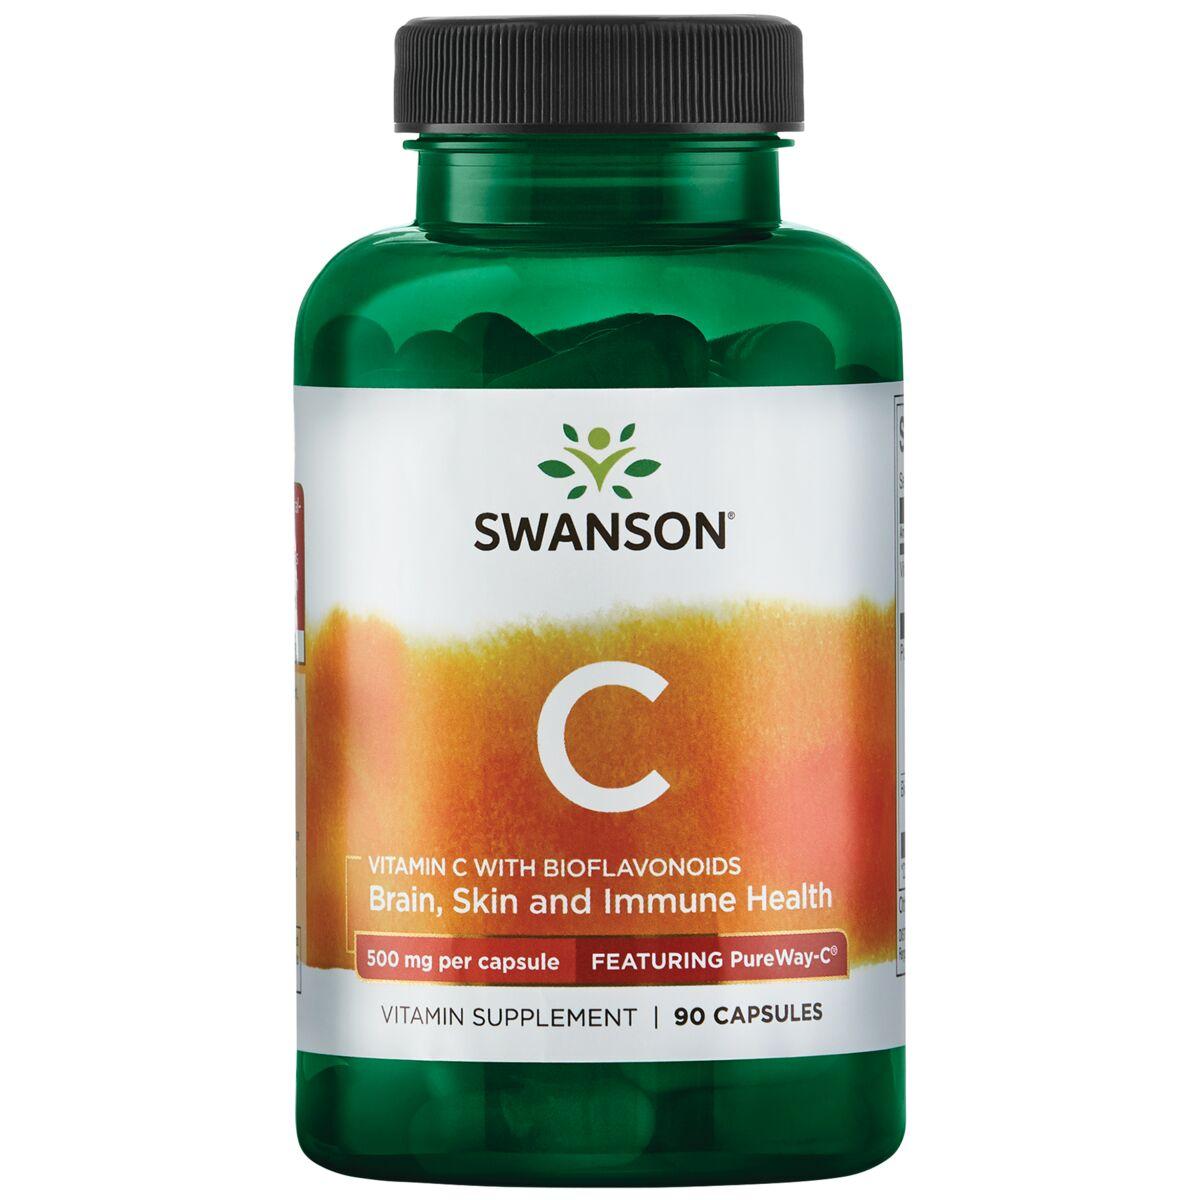 Swanson Ultra Vitamin C with Bioflavonoids - Featuring Pureway-C | 500 mg | 90 Caps